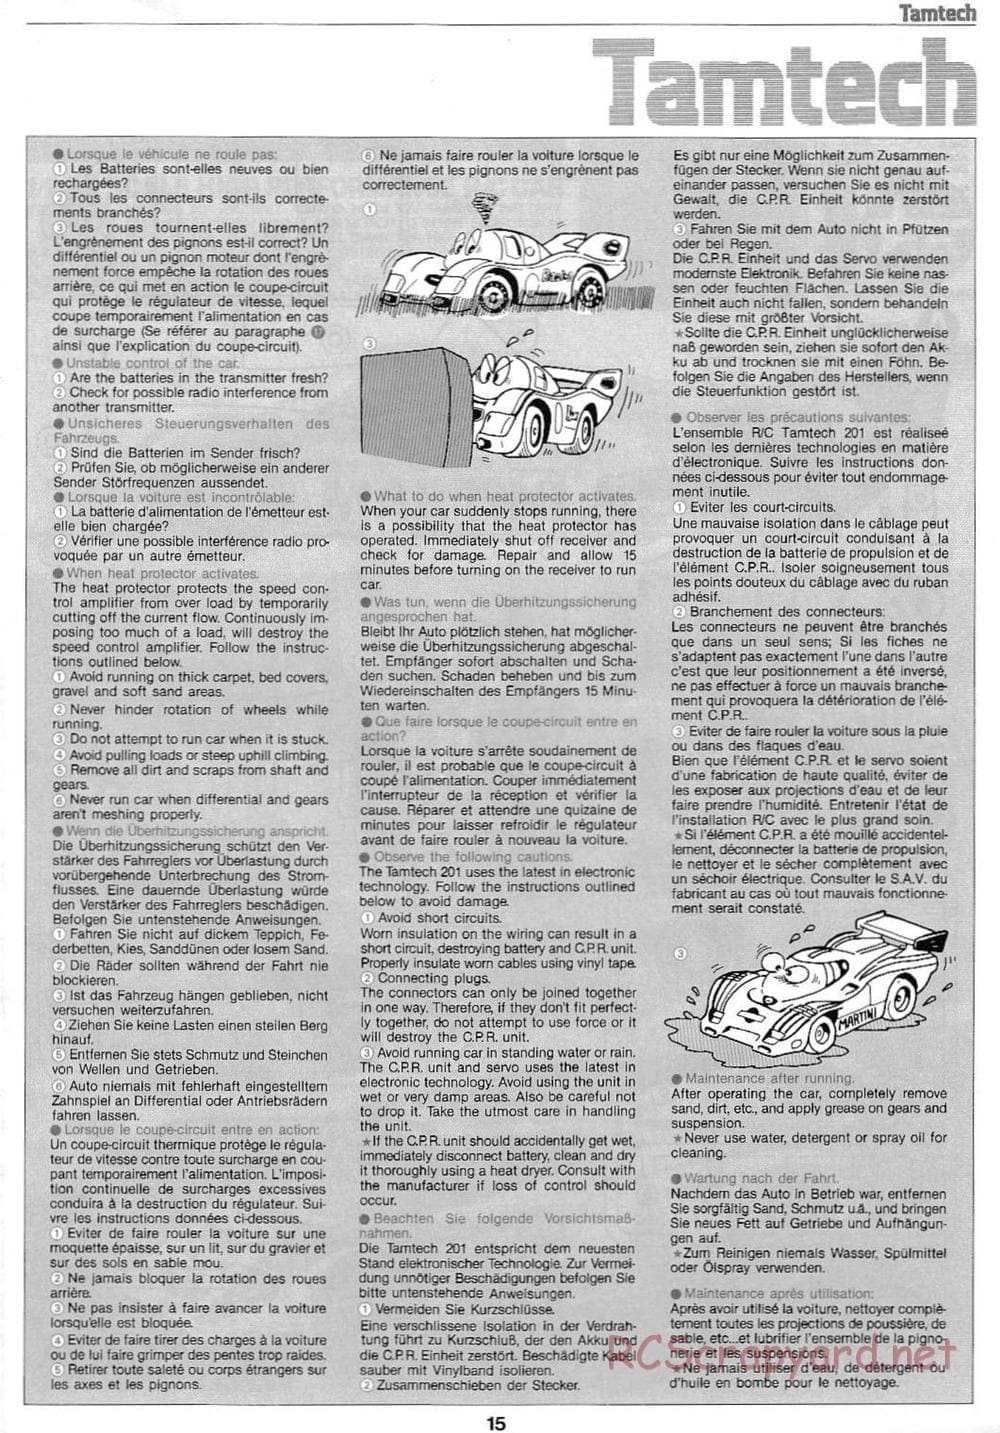 Tamiya - TamTech - On-Road Chassis - Manual - Page 13